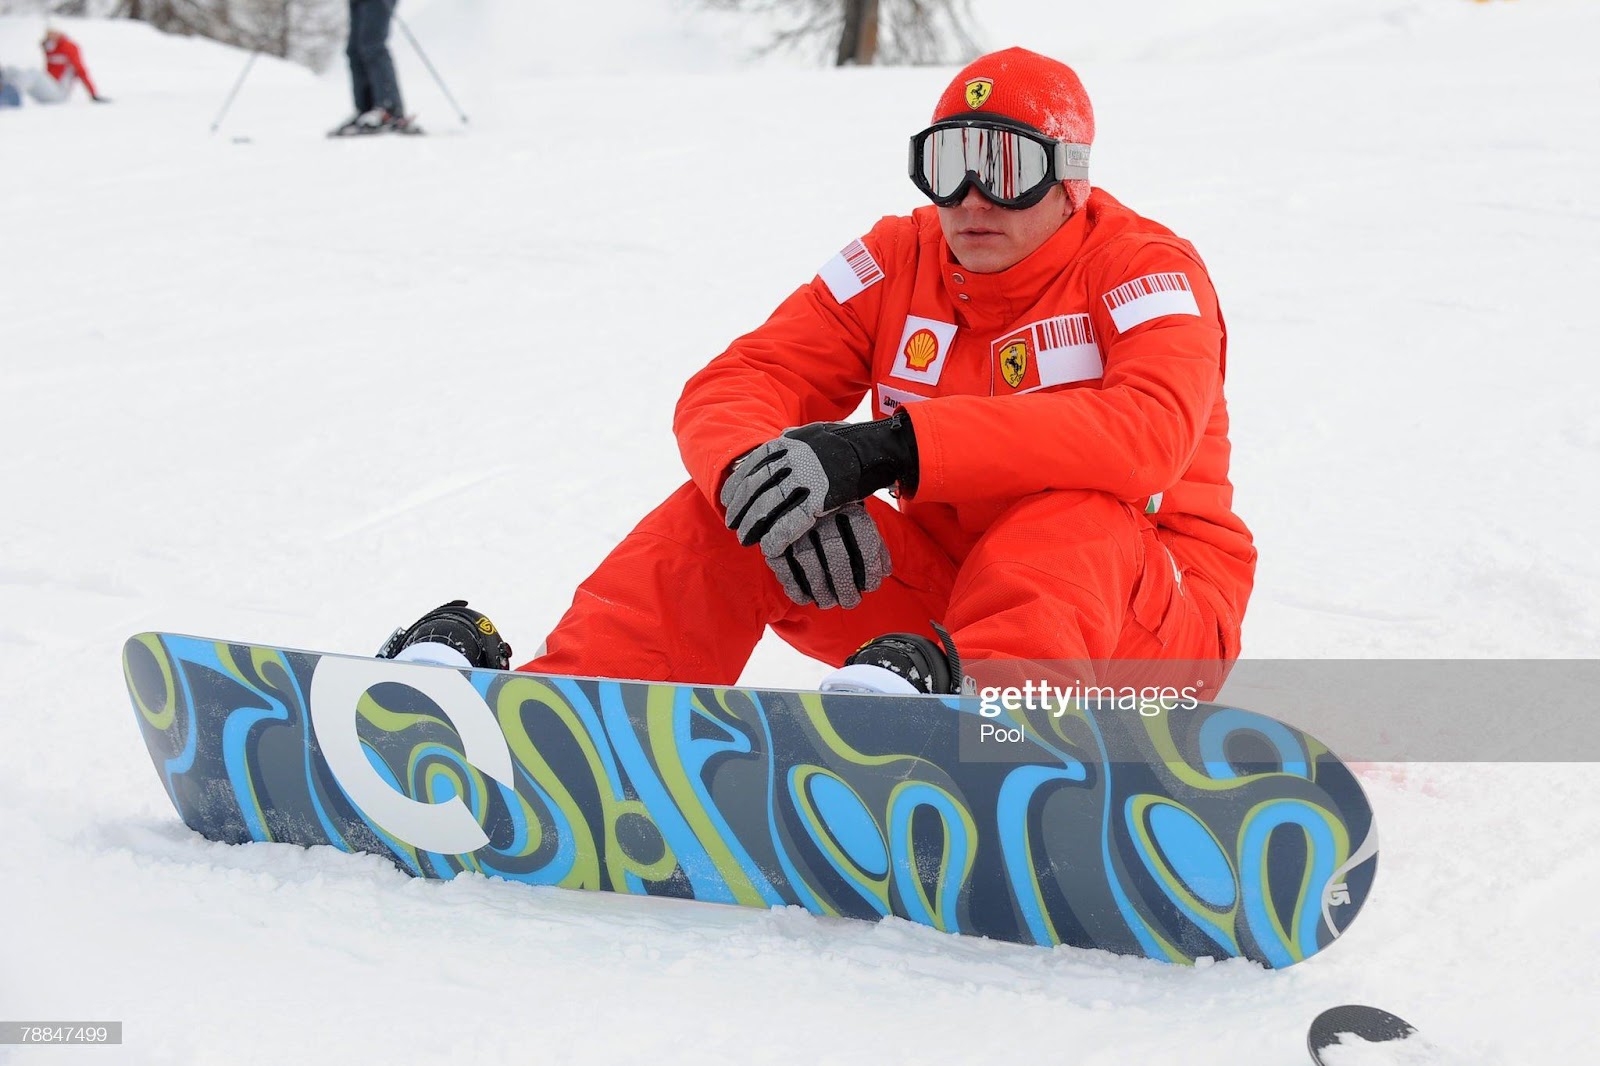 Kimi Raikkonen is seen snowboarding during the Ferrari Wroom F1 press meeting on January 9, 2008 in Madonna di Campiglio, Italy.